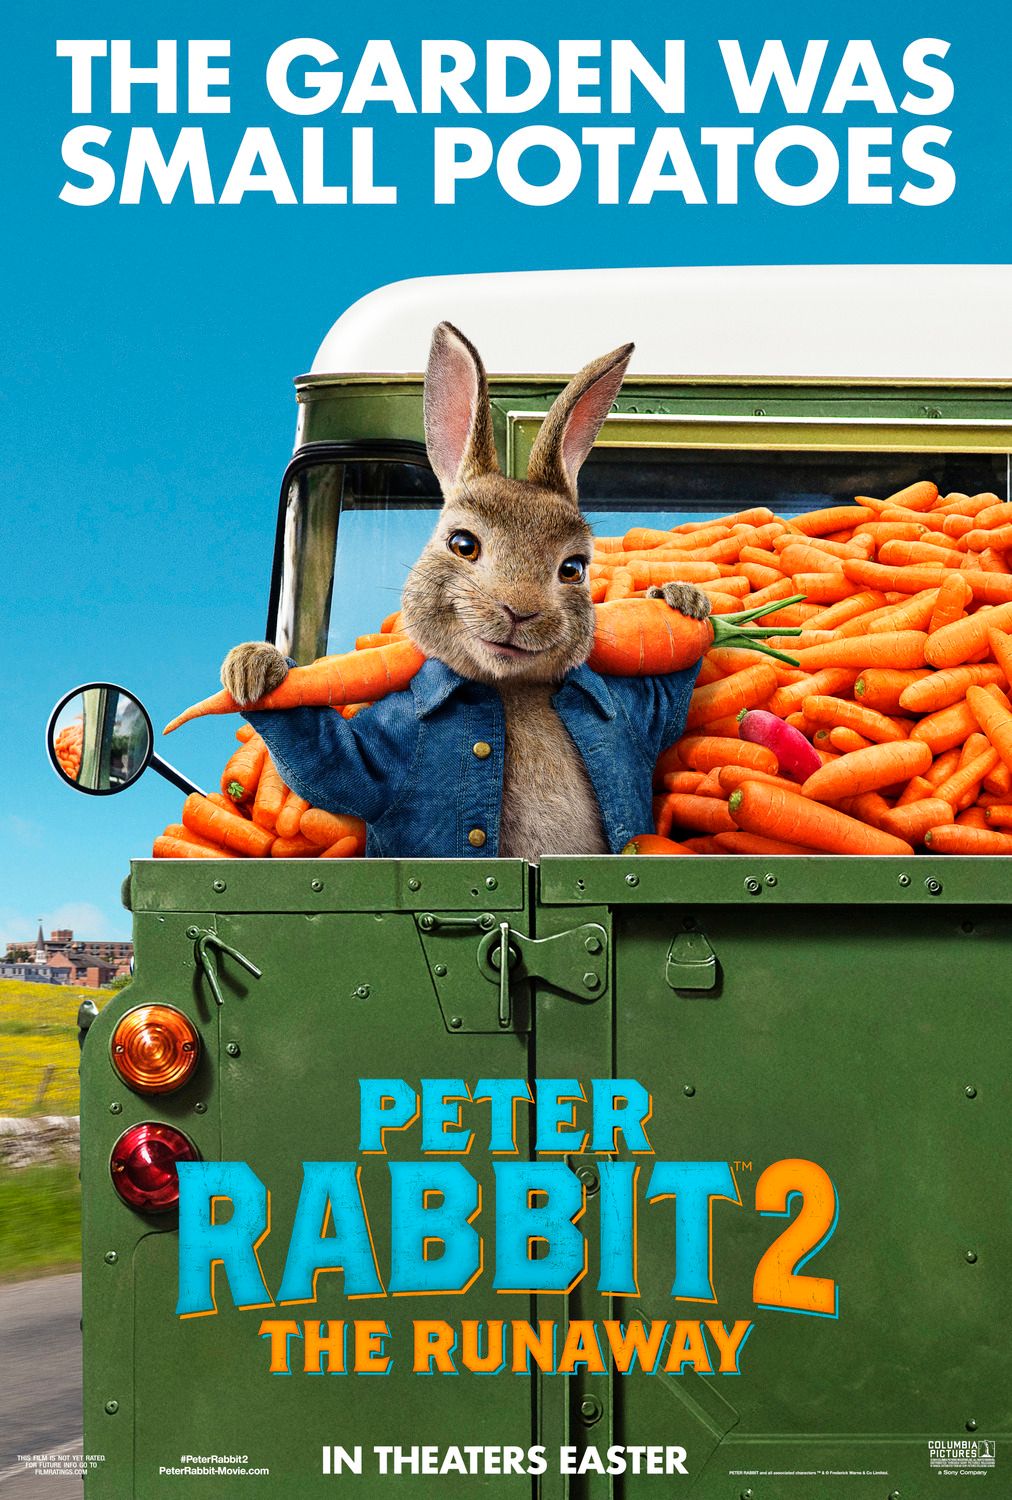 Peter Rabbit (2018) - IMDb